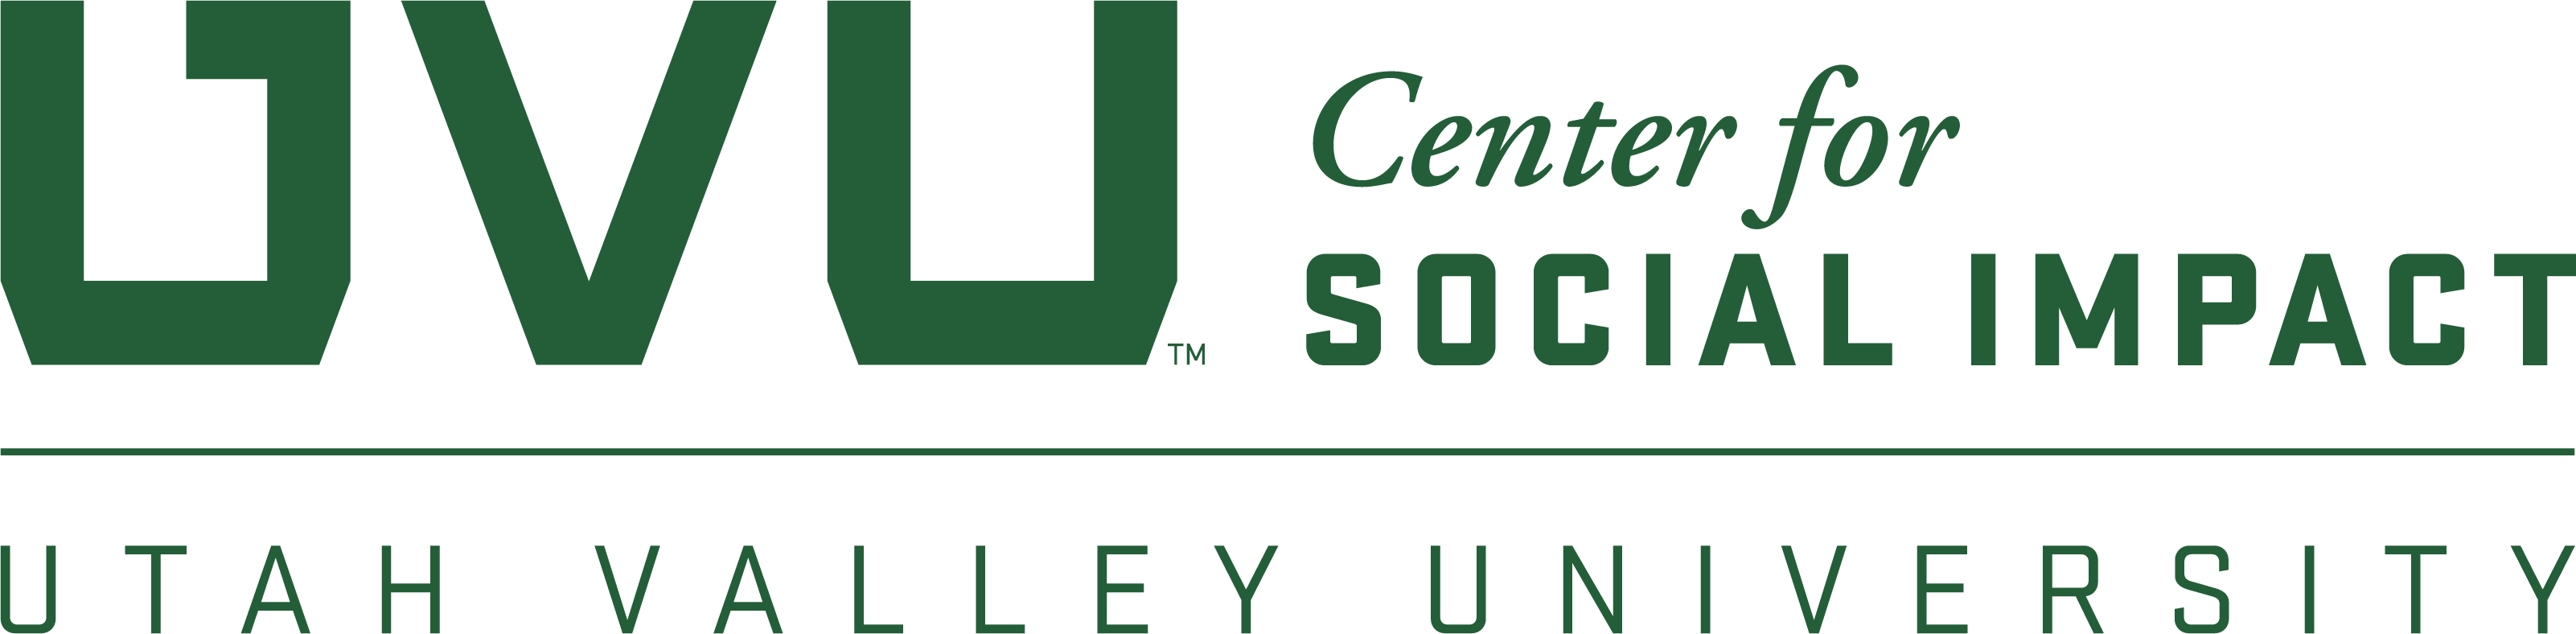 UVU Center for Social Impact logo